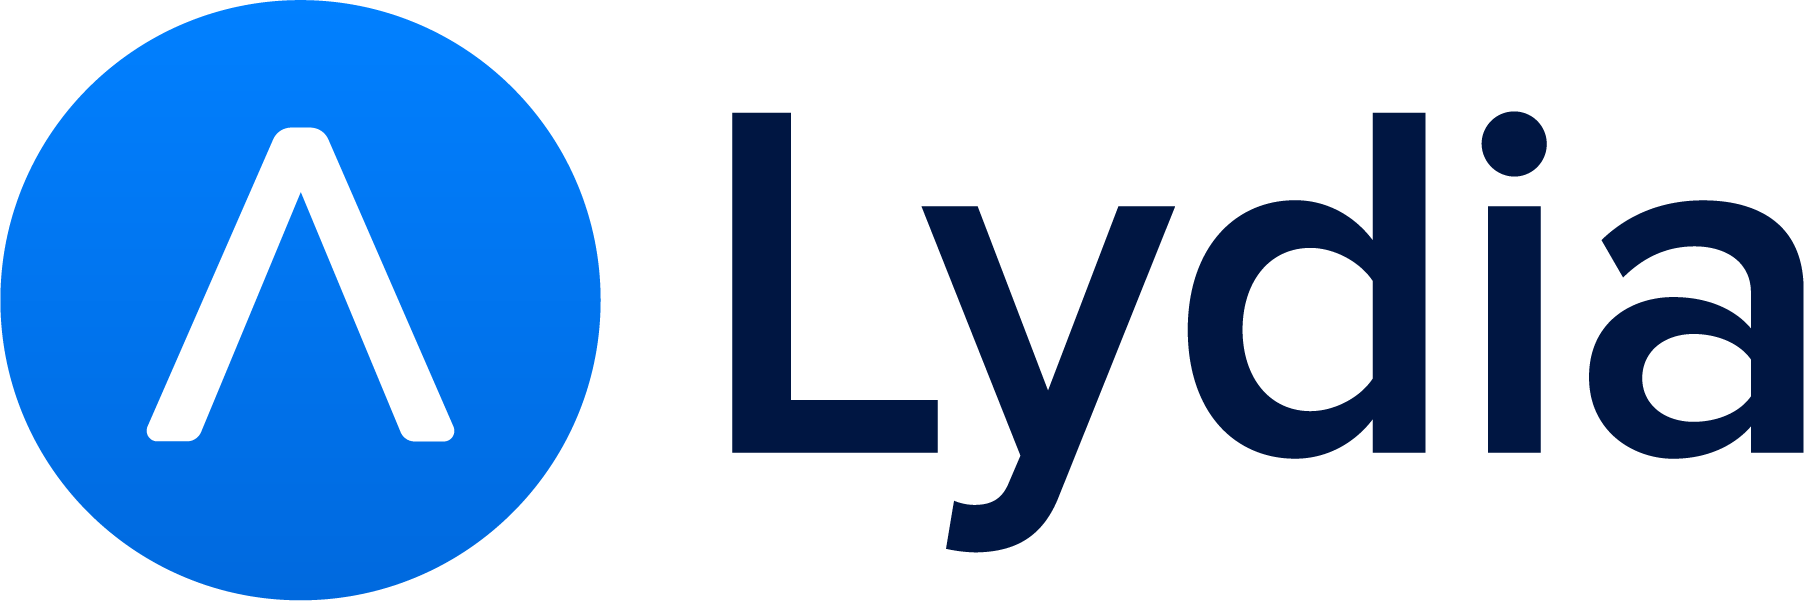 lydia logo